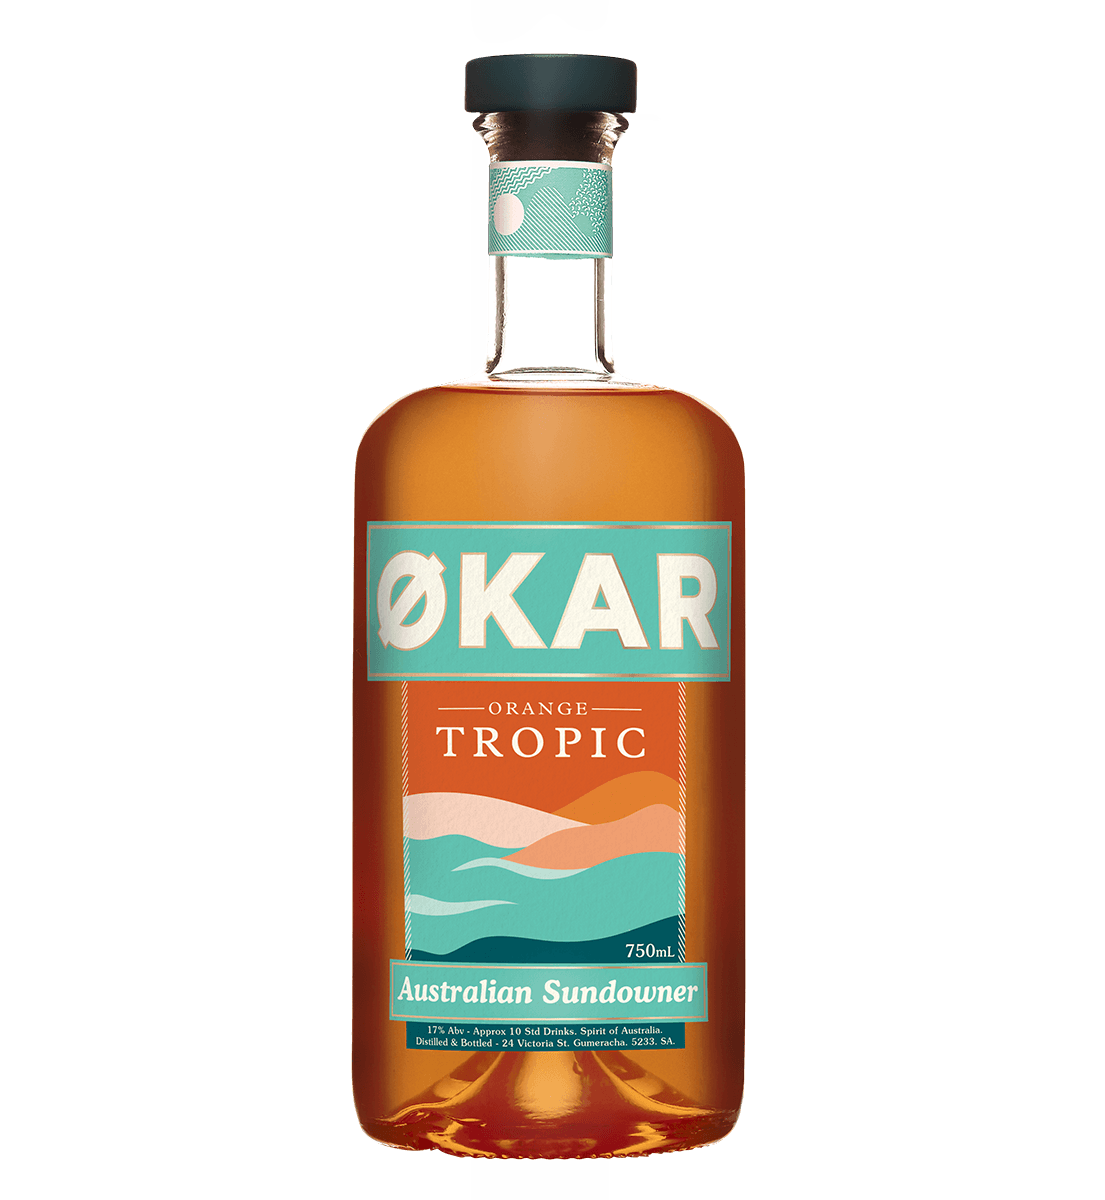 økar-tropic-750ml-australian-sundowner